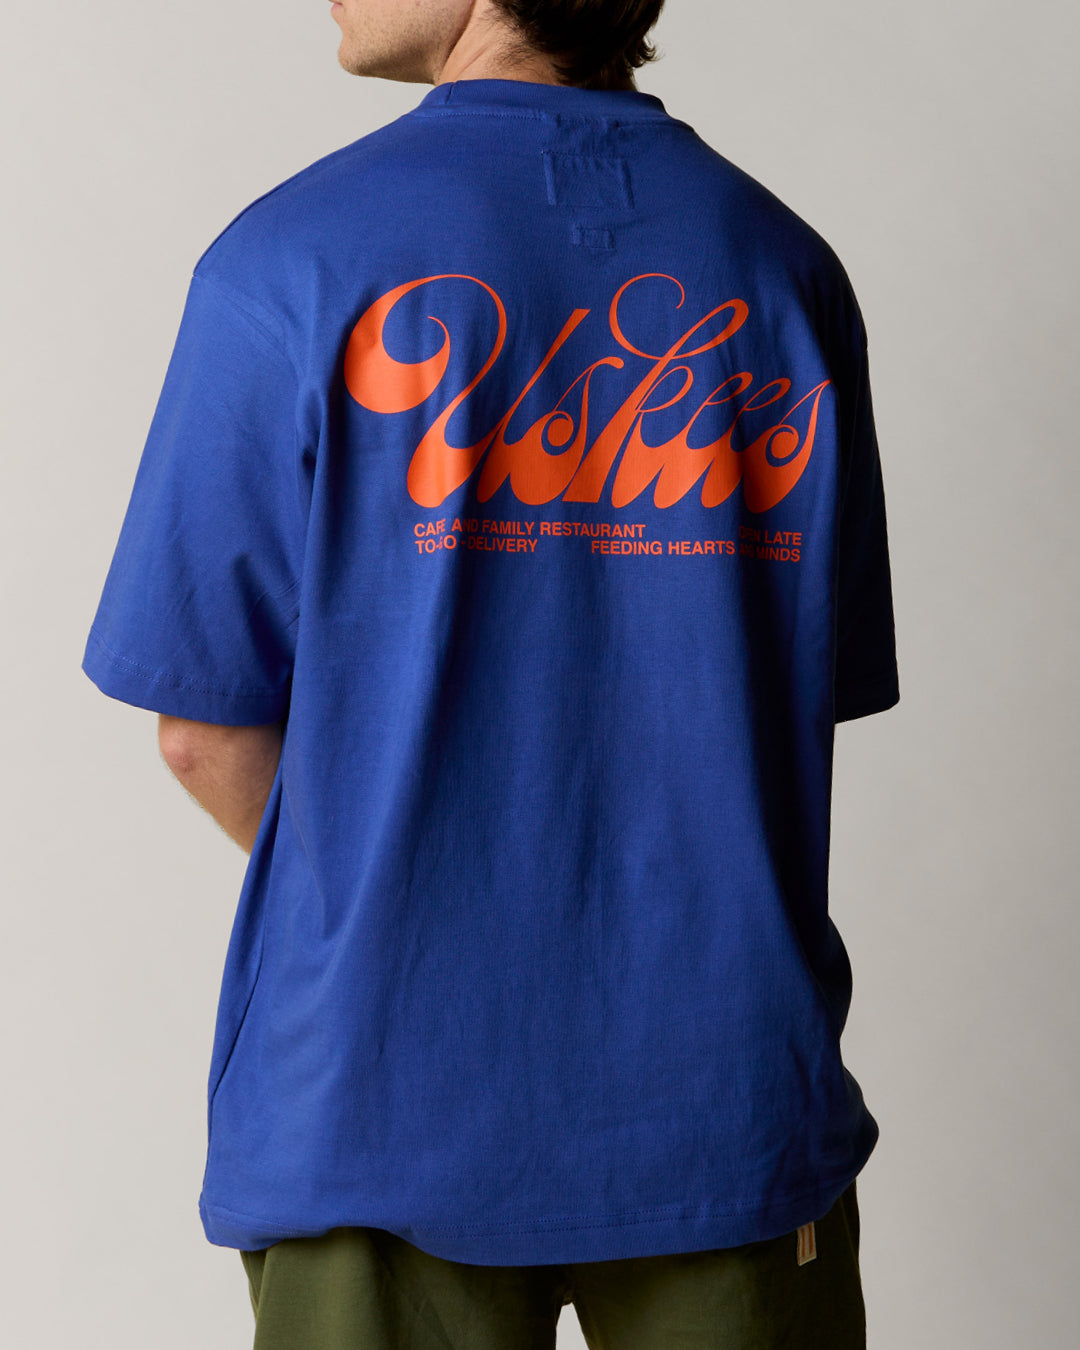 Back view model shot of uskees ultra blue oversized graphic Tee for men showing the 'Diner' design in orange